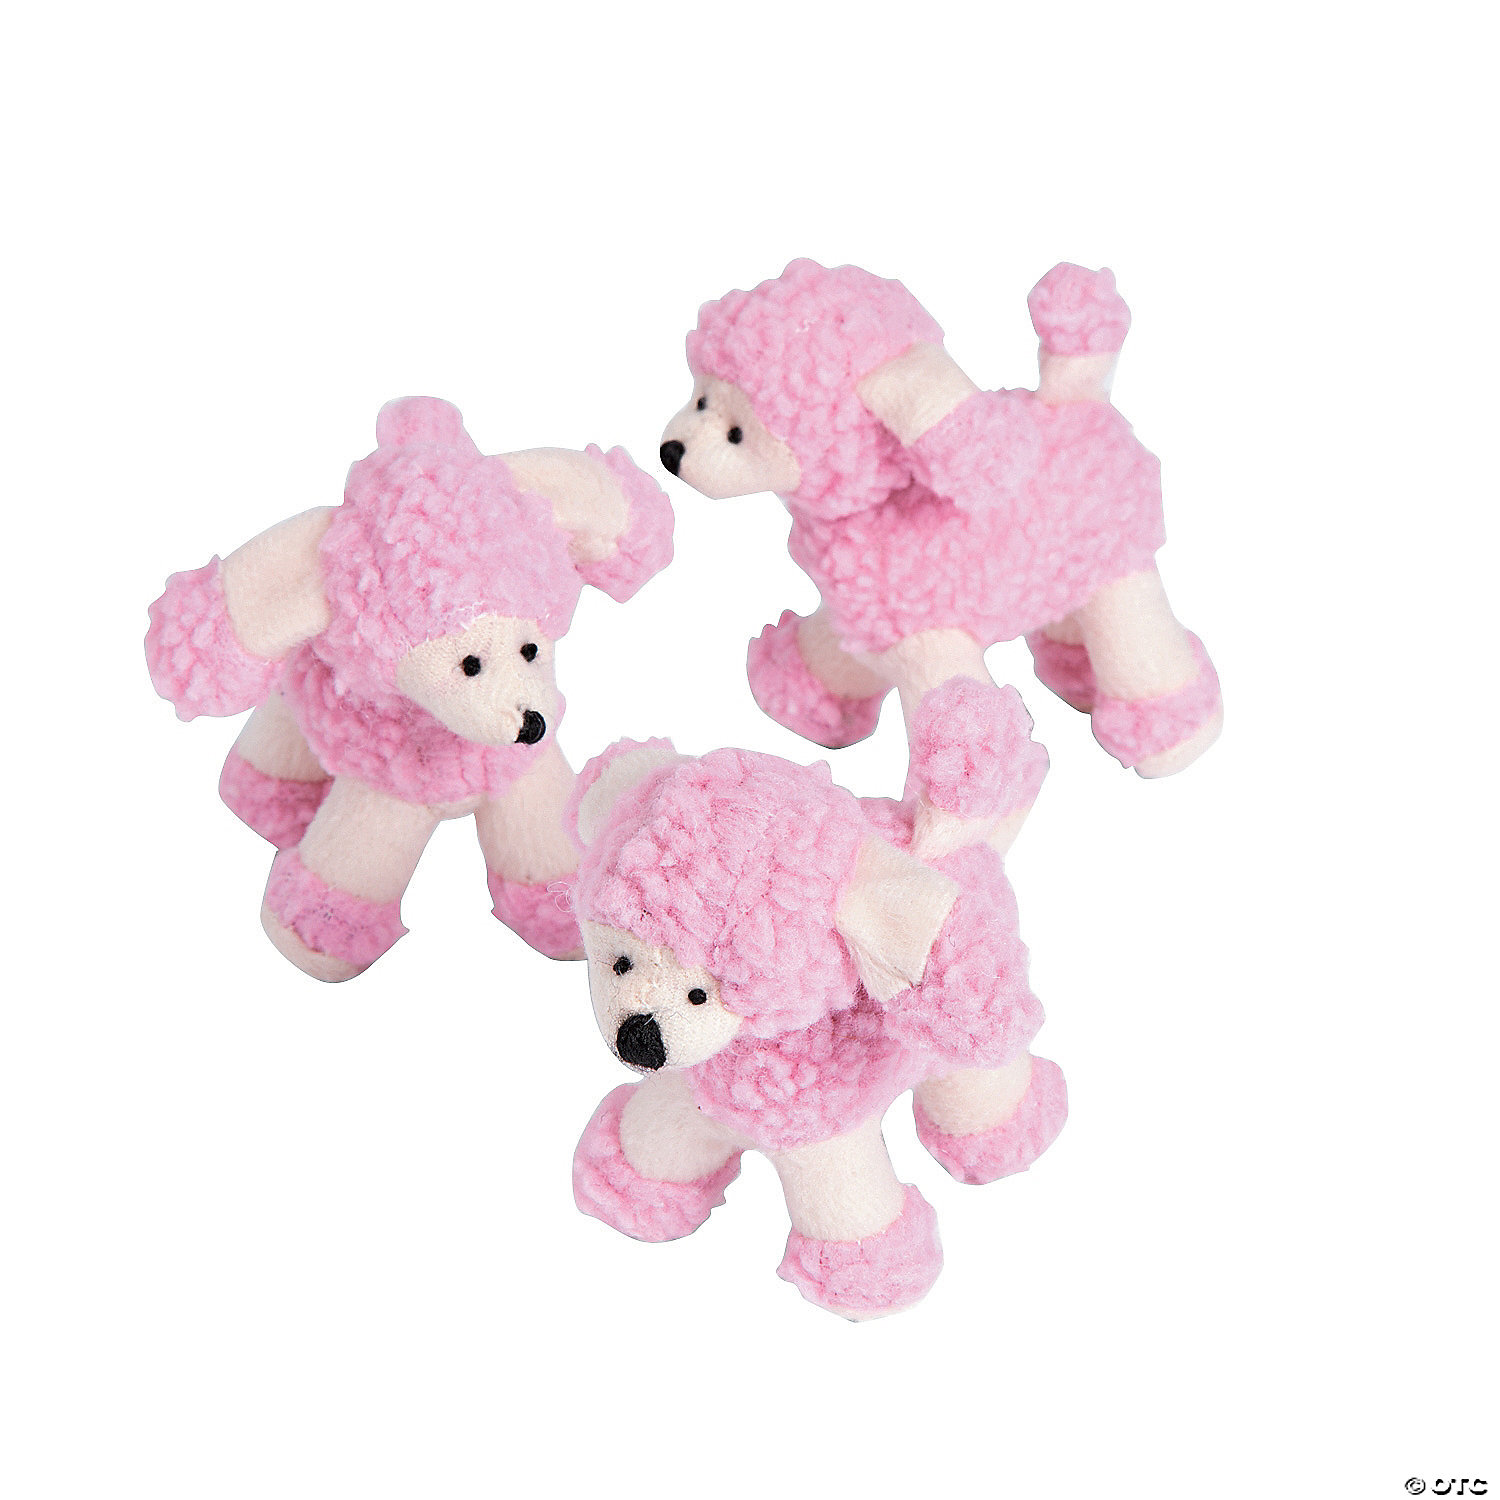 Mini Pink Stuffed Poodles - 12 Pc. | Oriental Trading